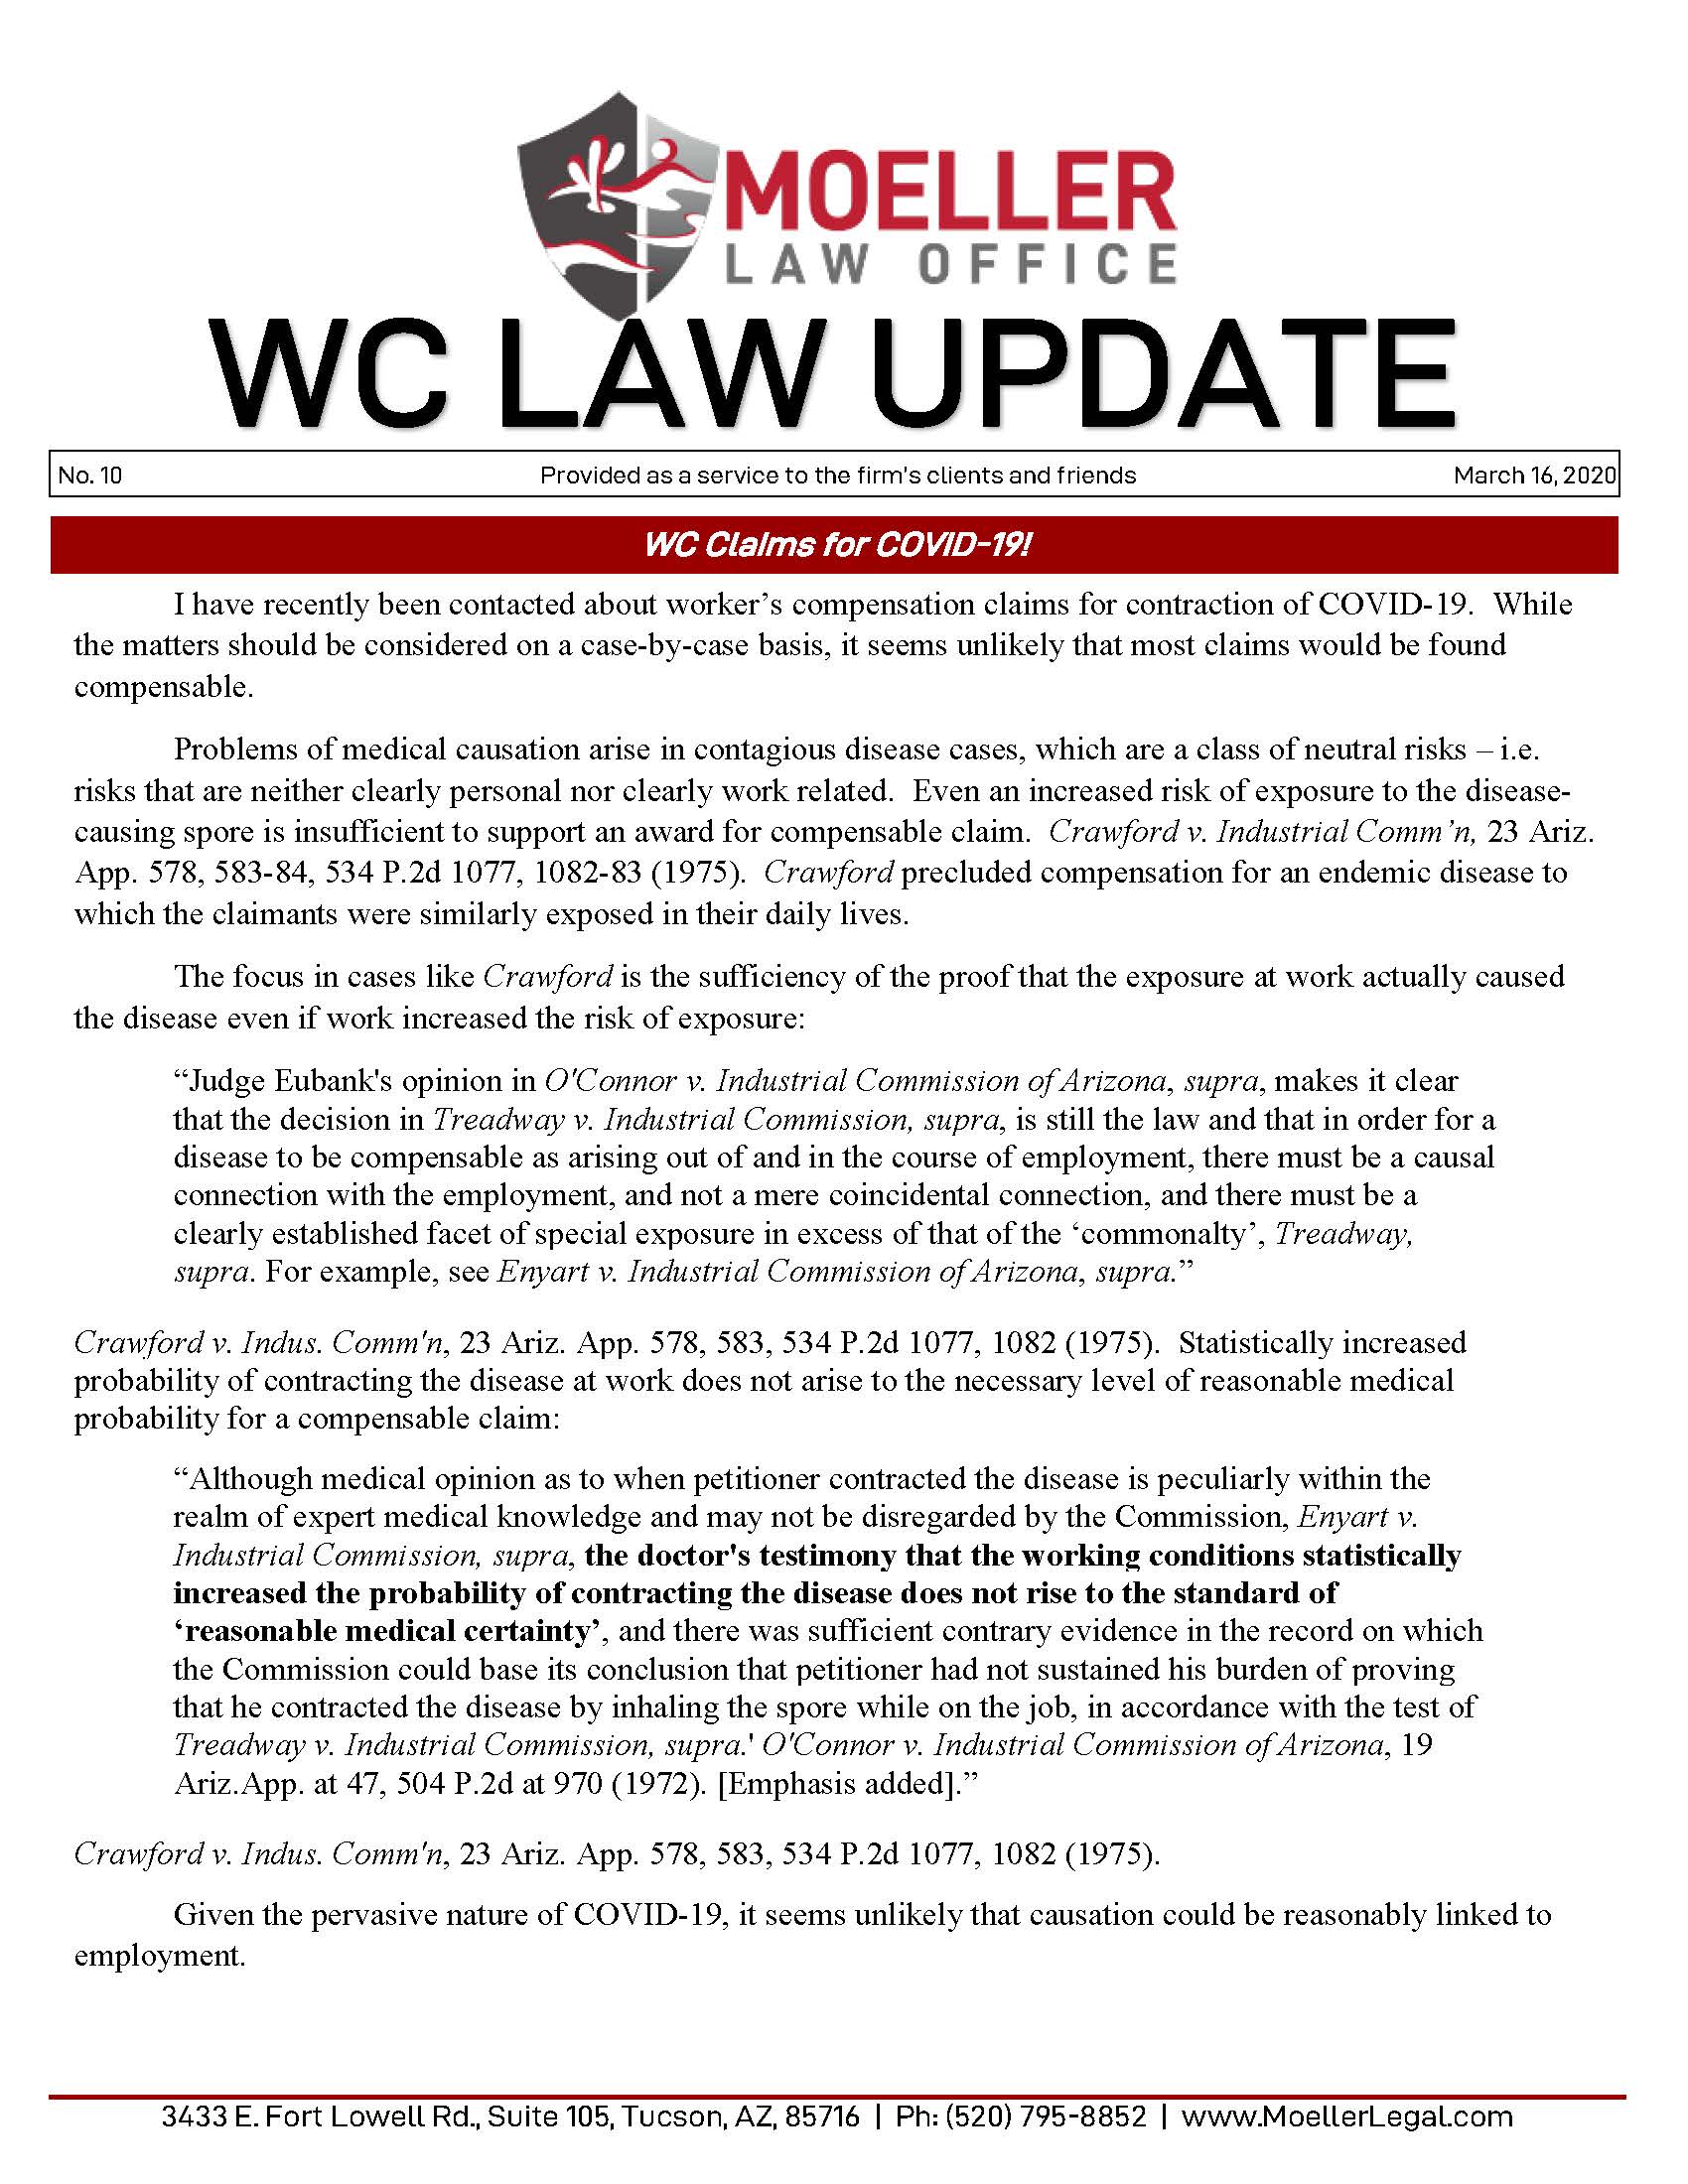 2020 03 16 &#8211; No. 10 &#8211; WC Law Update &#8211; COVID-19